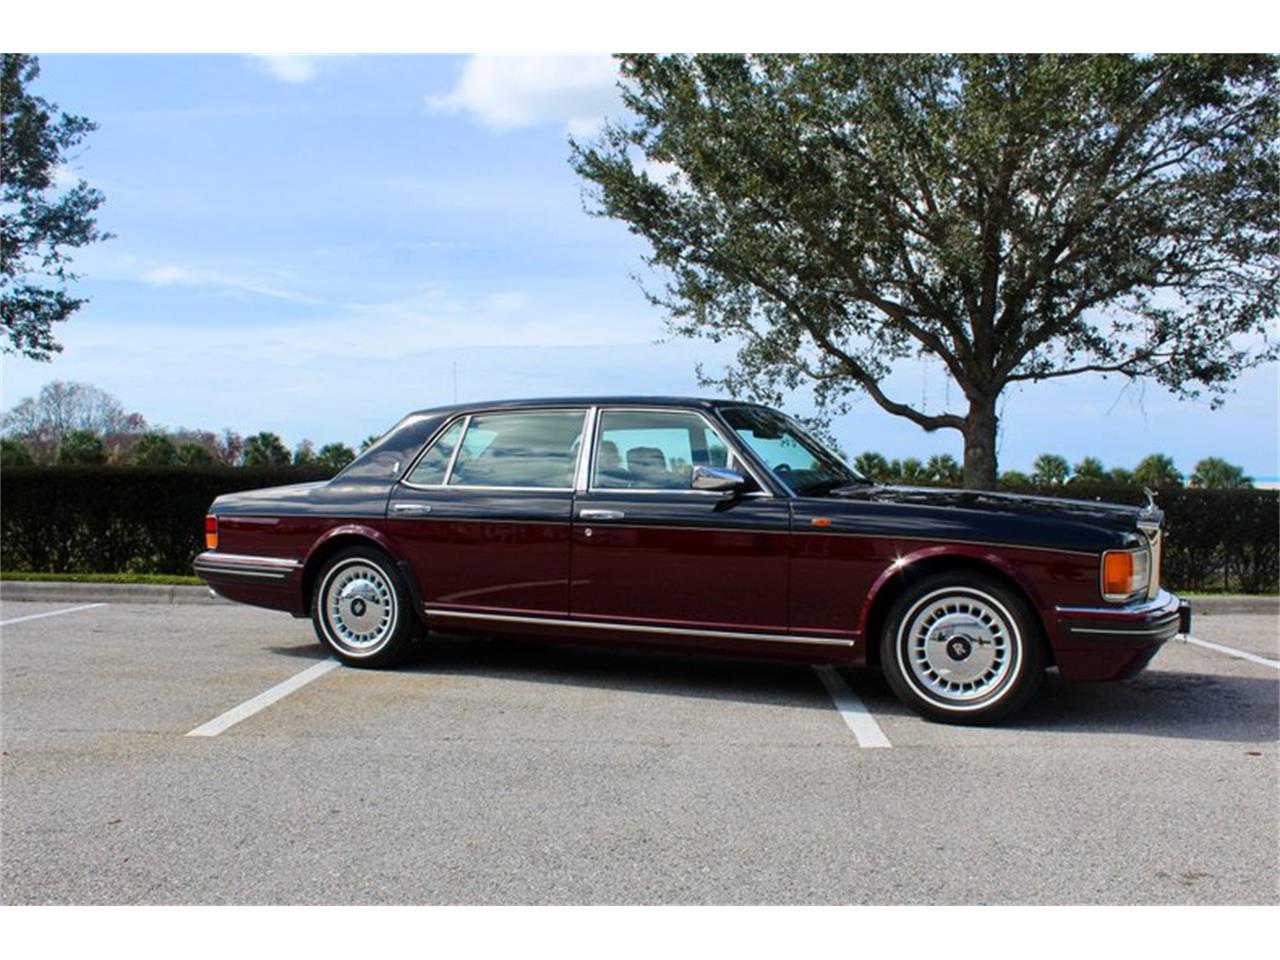 For Sale: 1996 Rolls-Royce Silver Spur in Sarasota, Florida for sale in Sarasota, FL